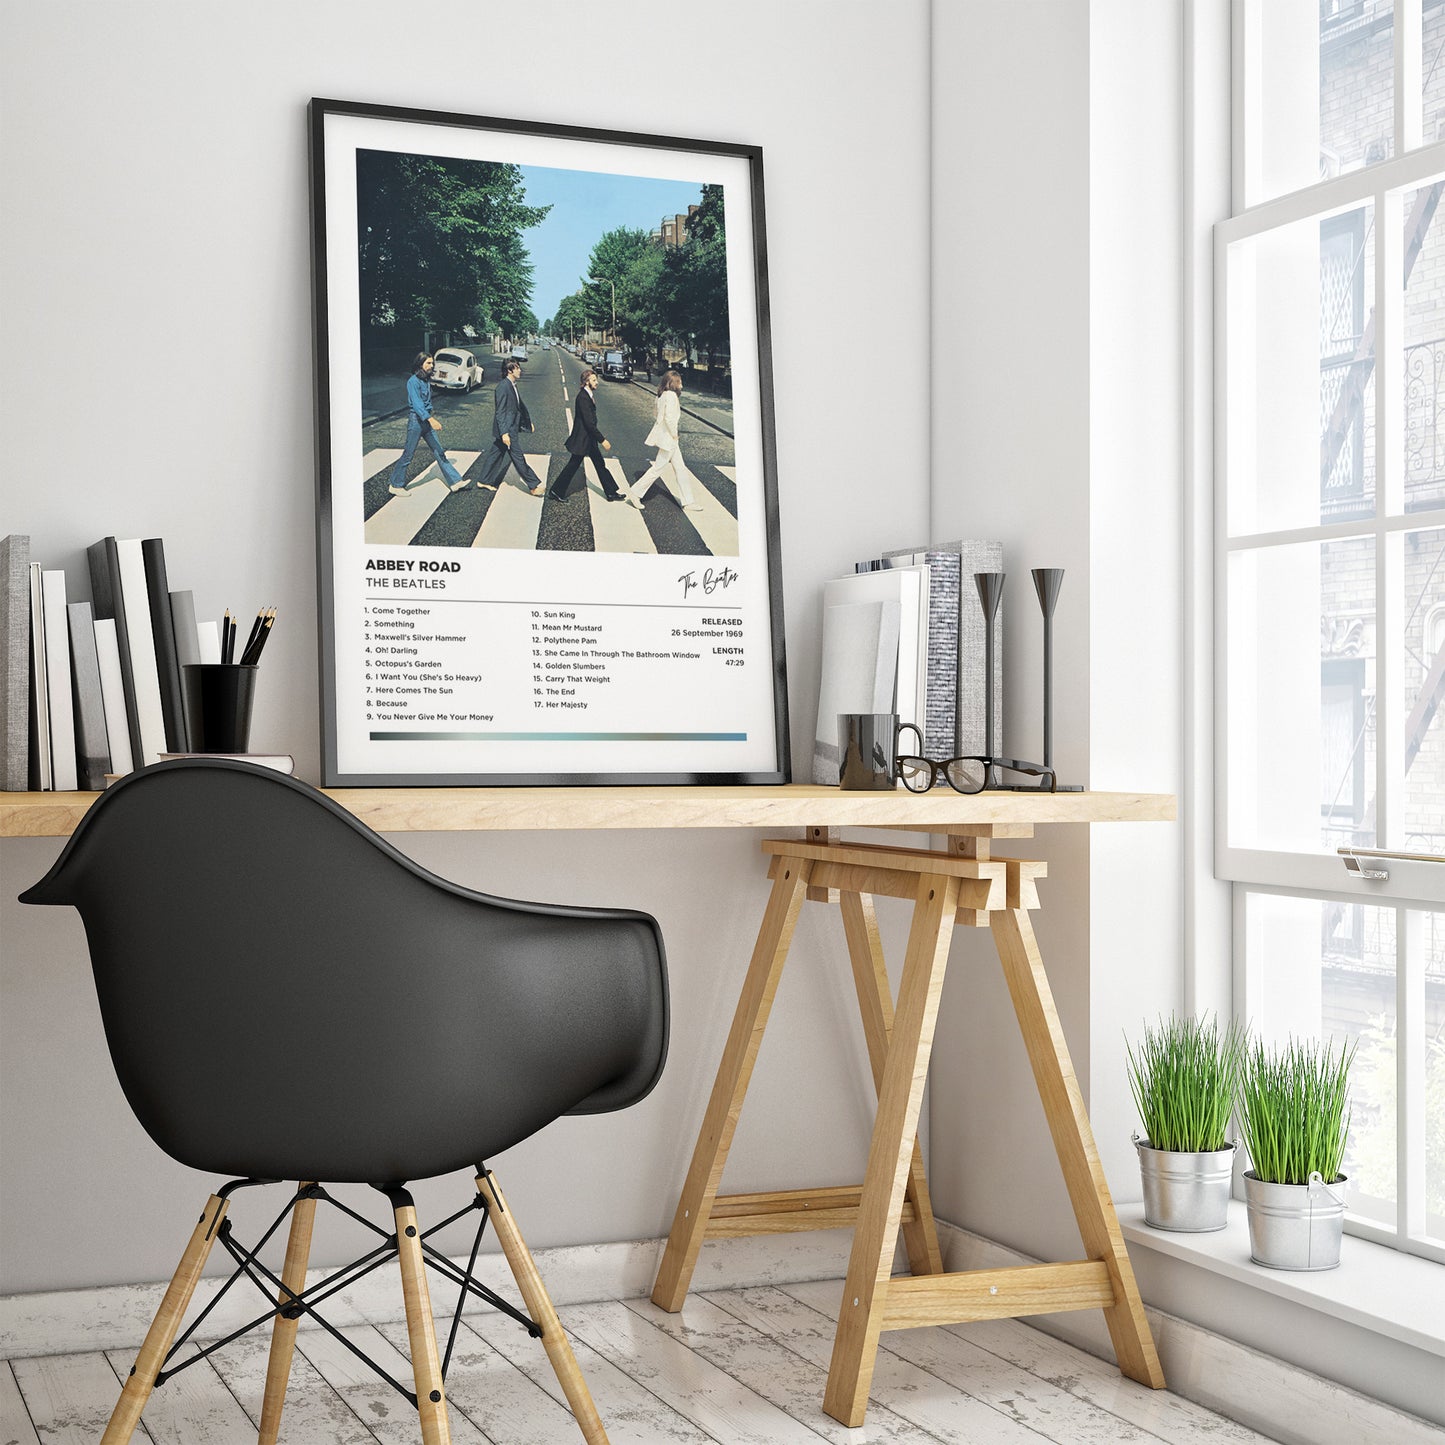 The Beatles - Abbey Road Framed Poster Print | Polaroid Style | Album Cover Artwork